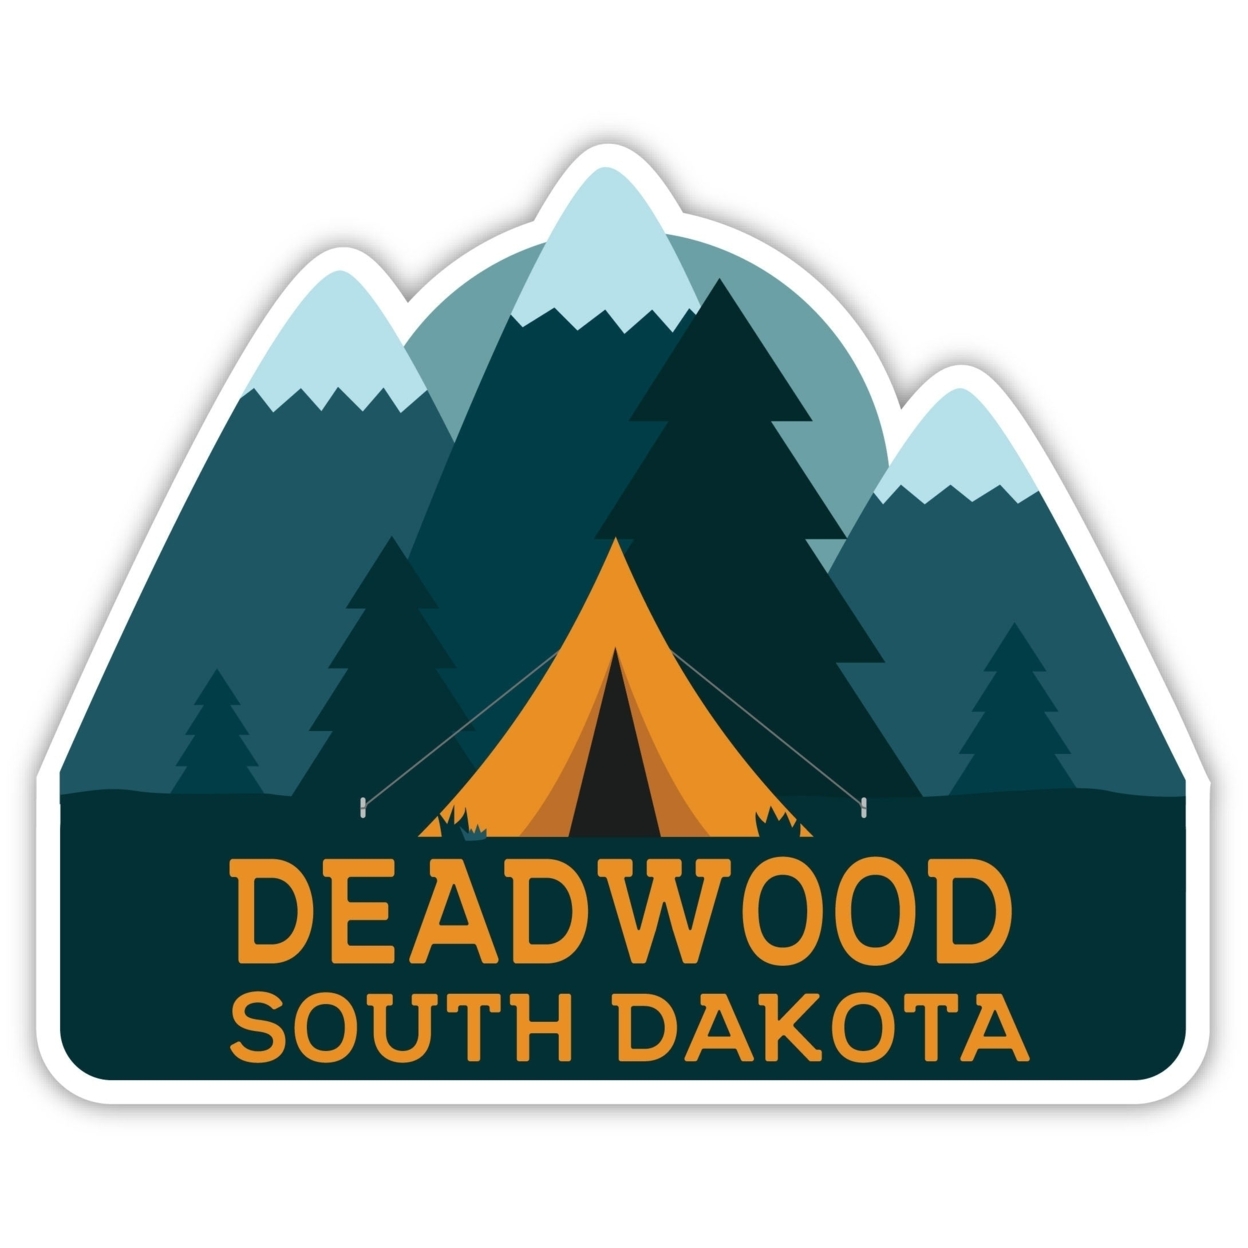 Deadwood South Dakota Souvenir Decorative Stickers (Choose Theme And Size) - 4-Pack, 2-Inch, Camp Life